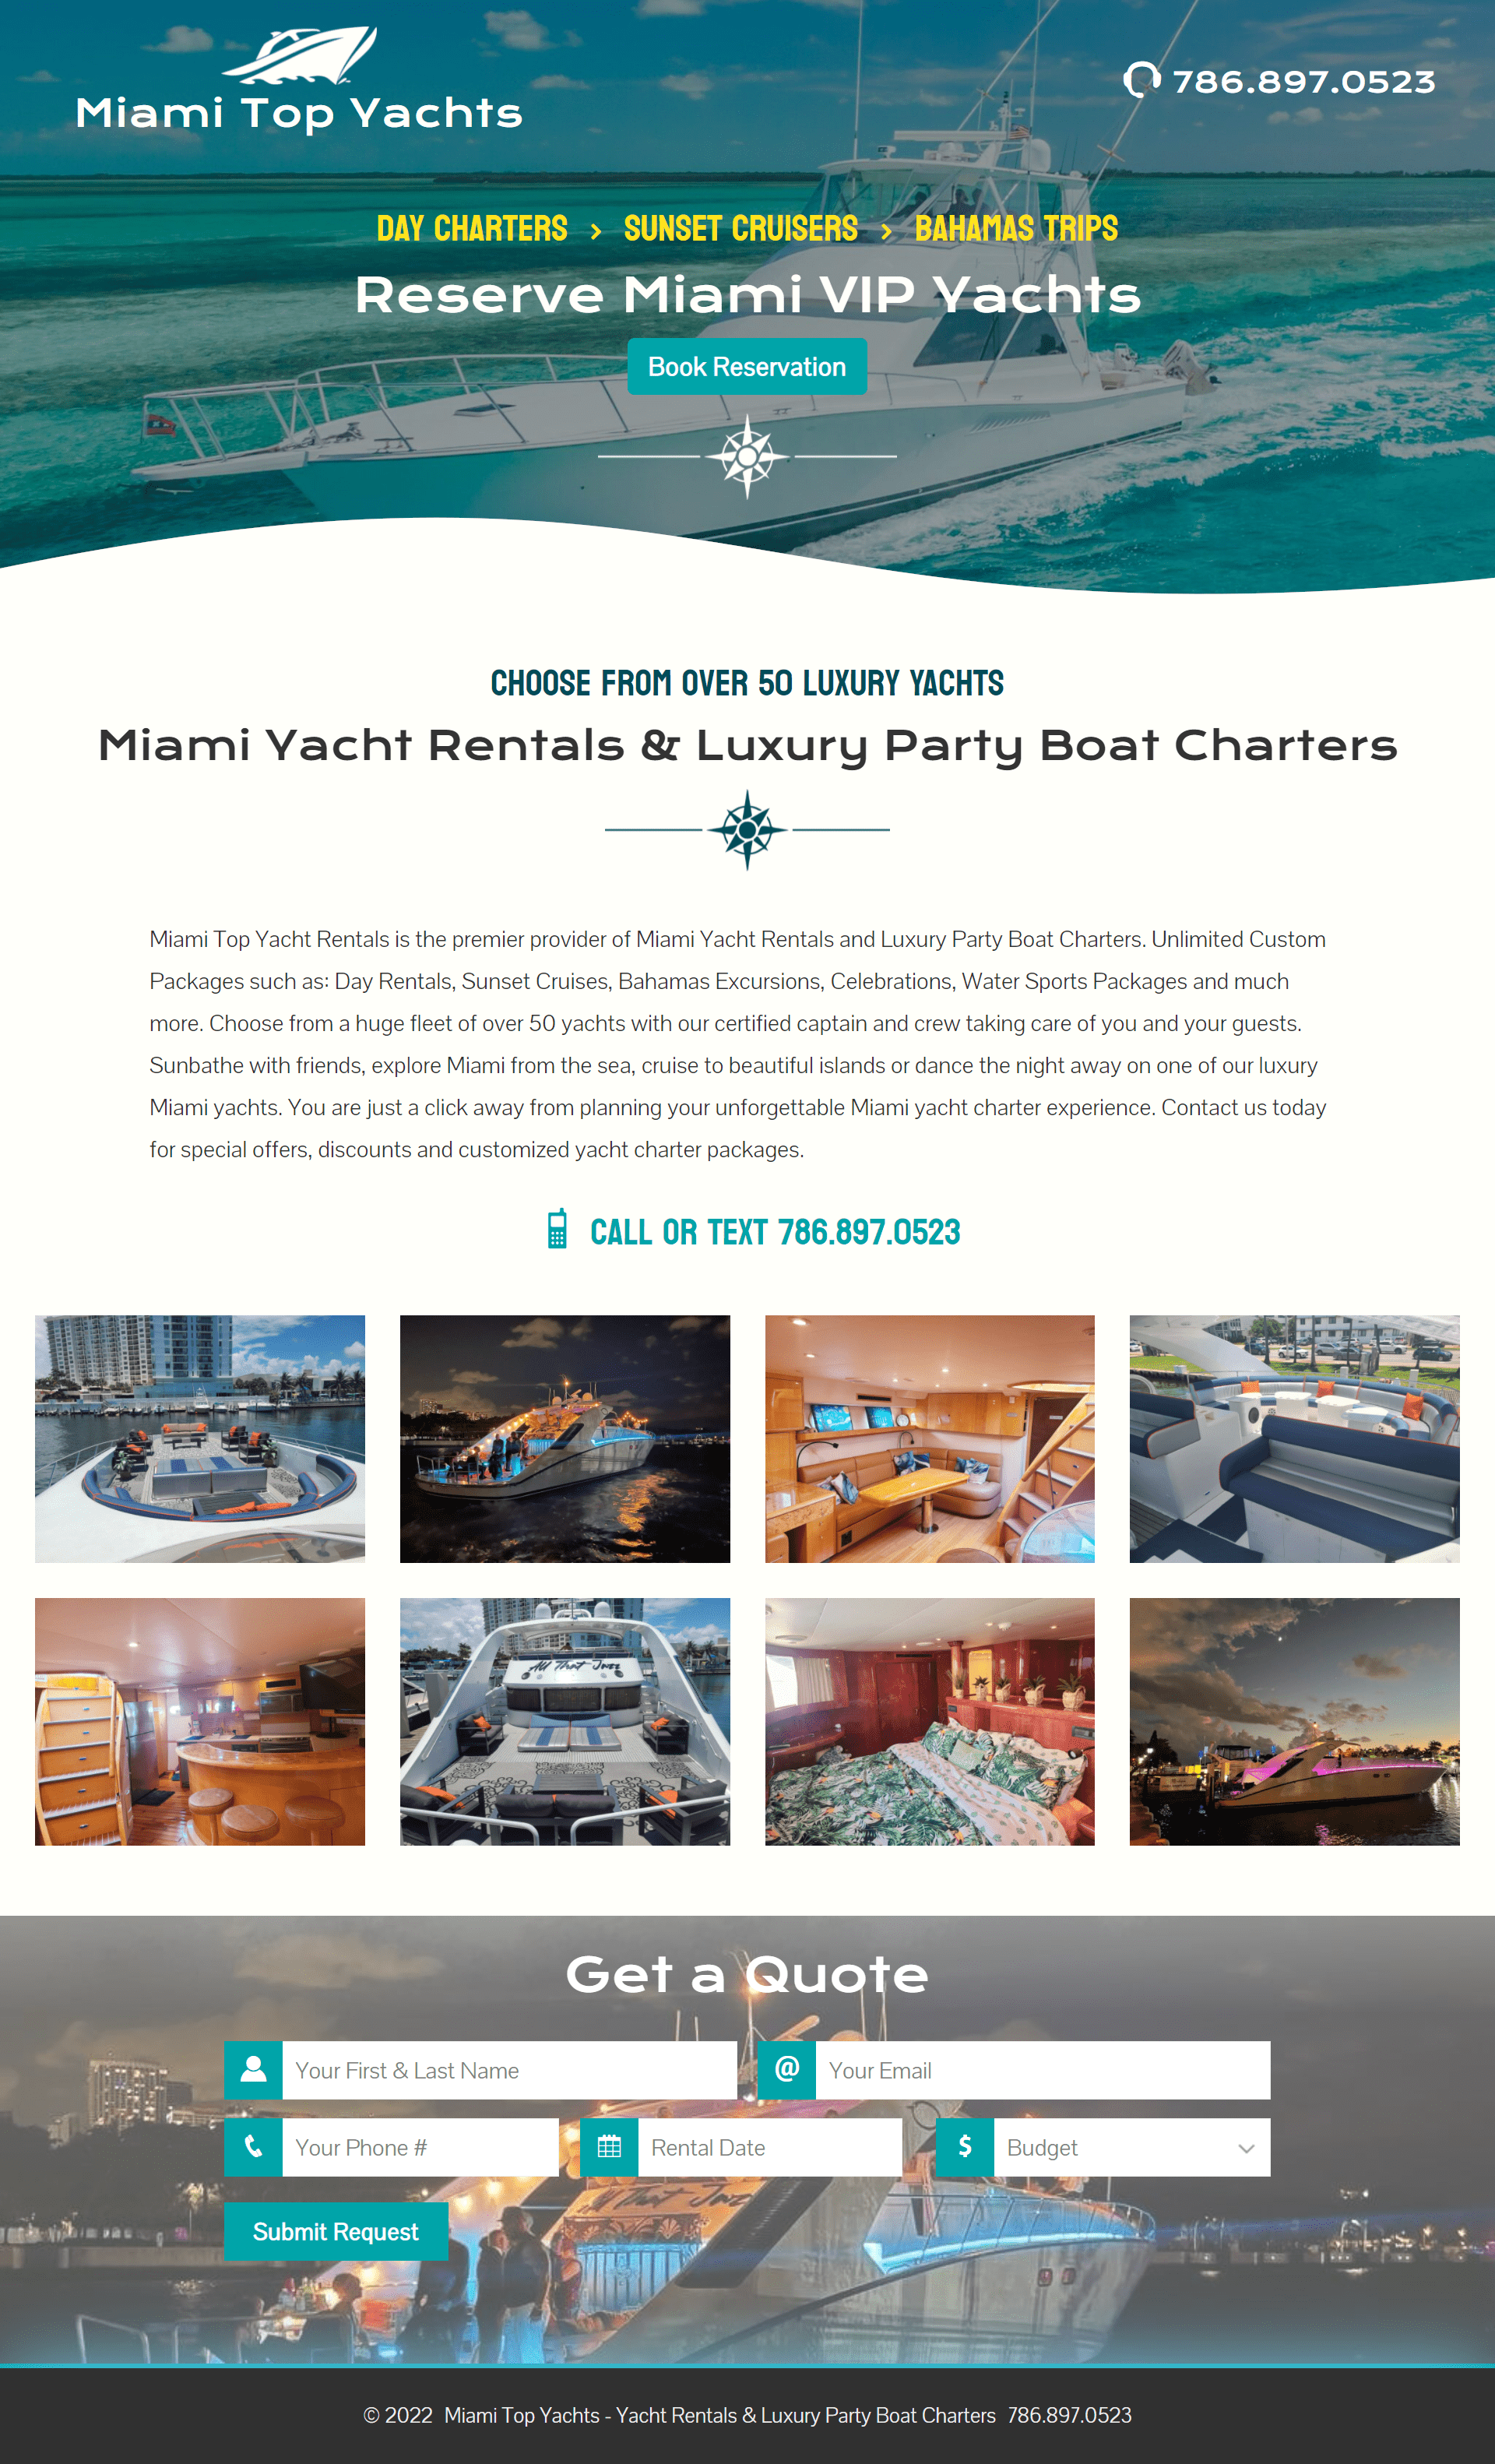 Miami Top Yachts homepage image